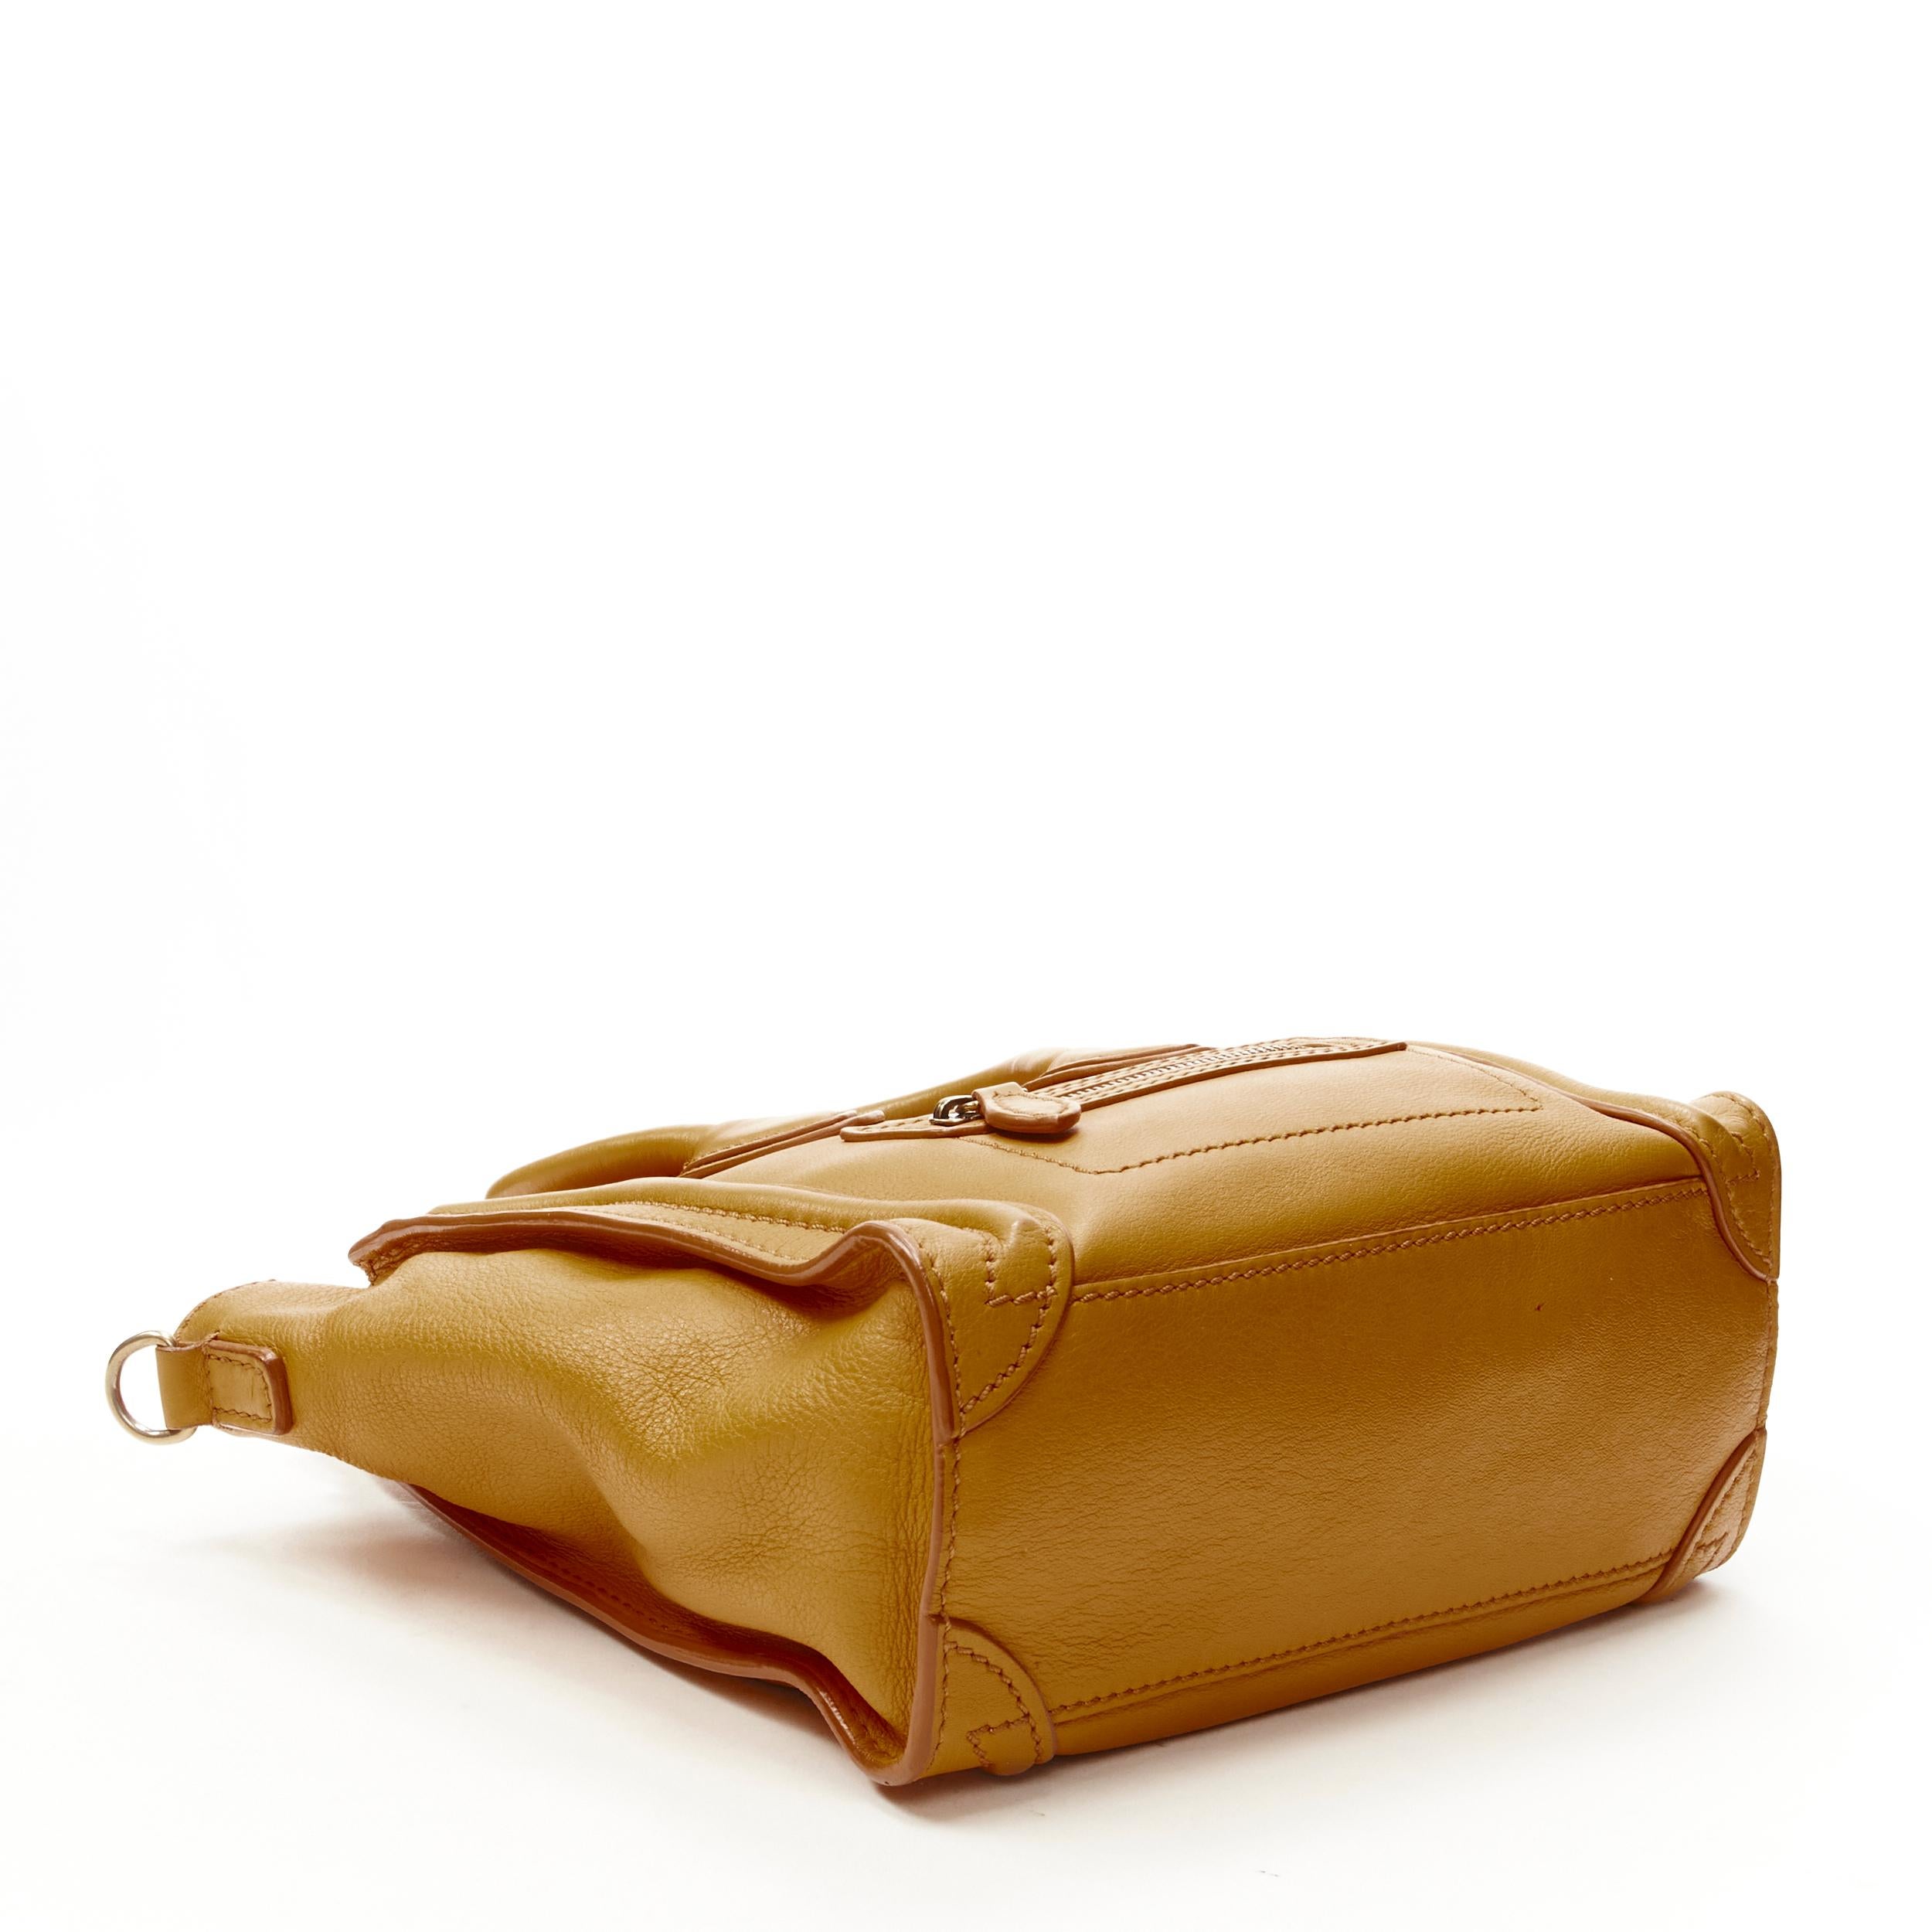 OLD CELINE Phoebe Philo Nano Luggage mustard yellow crossbody shopper tote bag 2